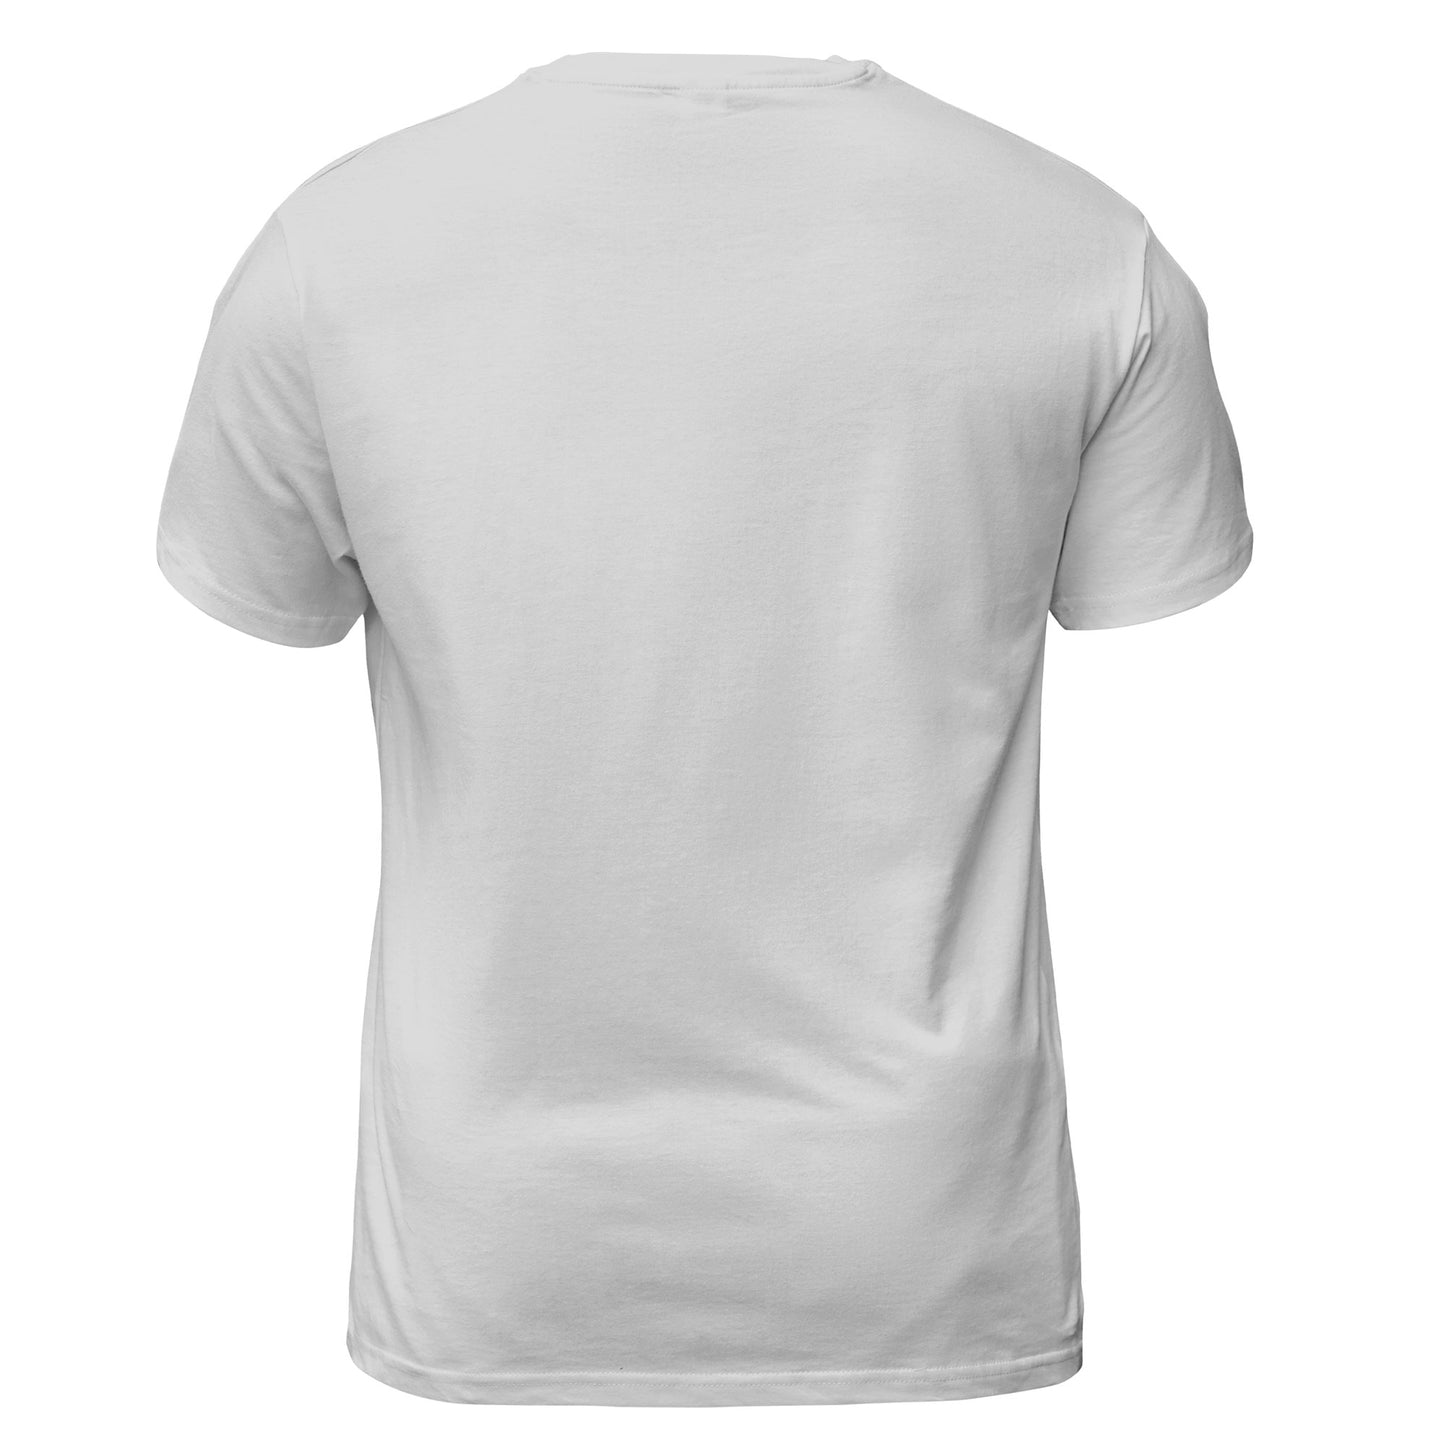 French Bulldog 2 - 3D Graphic T-Shirt